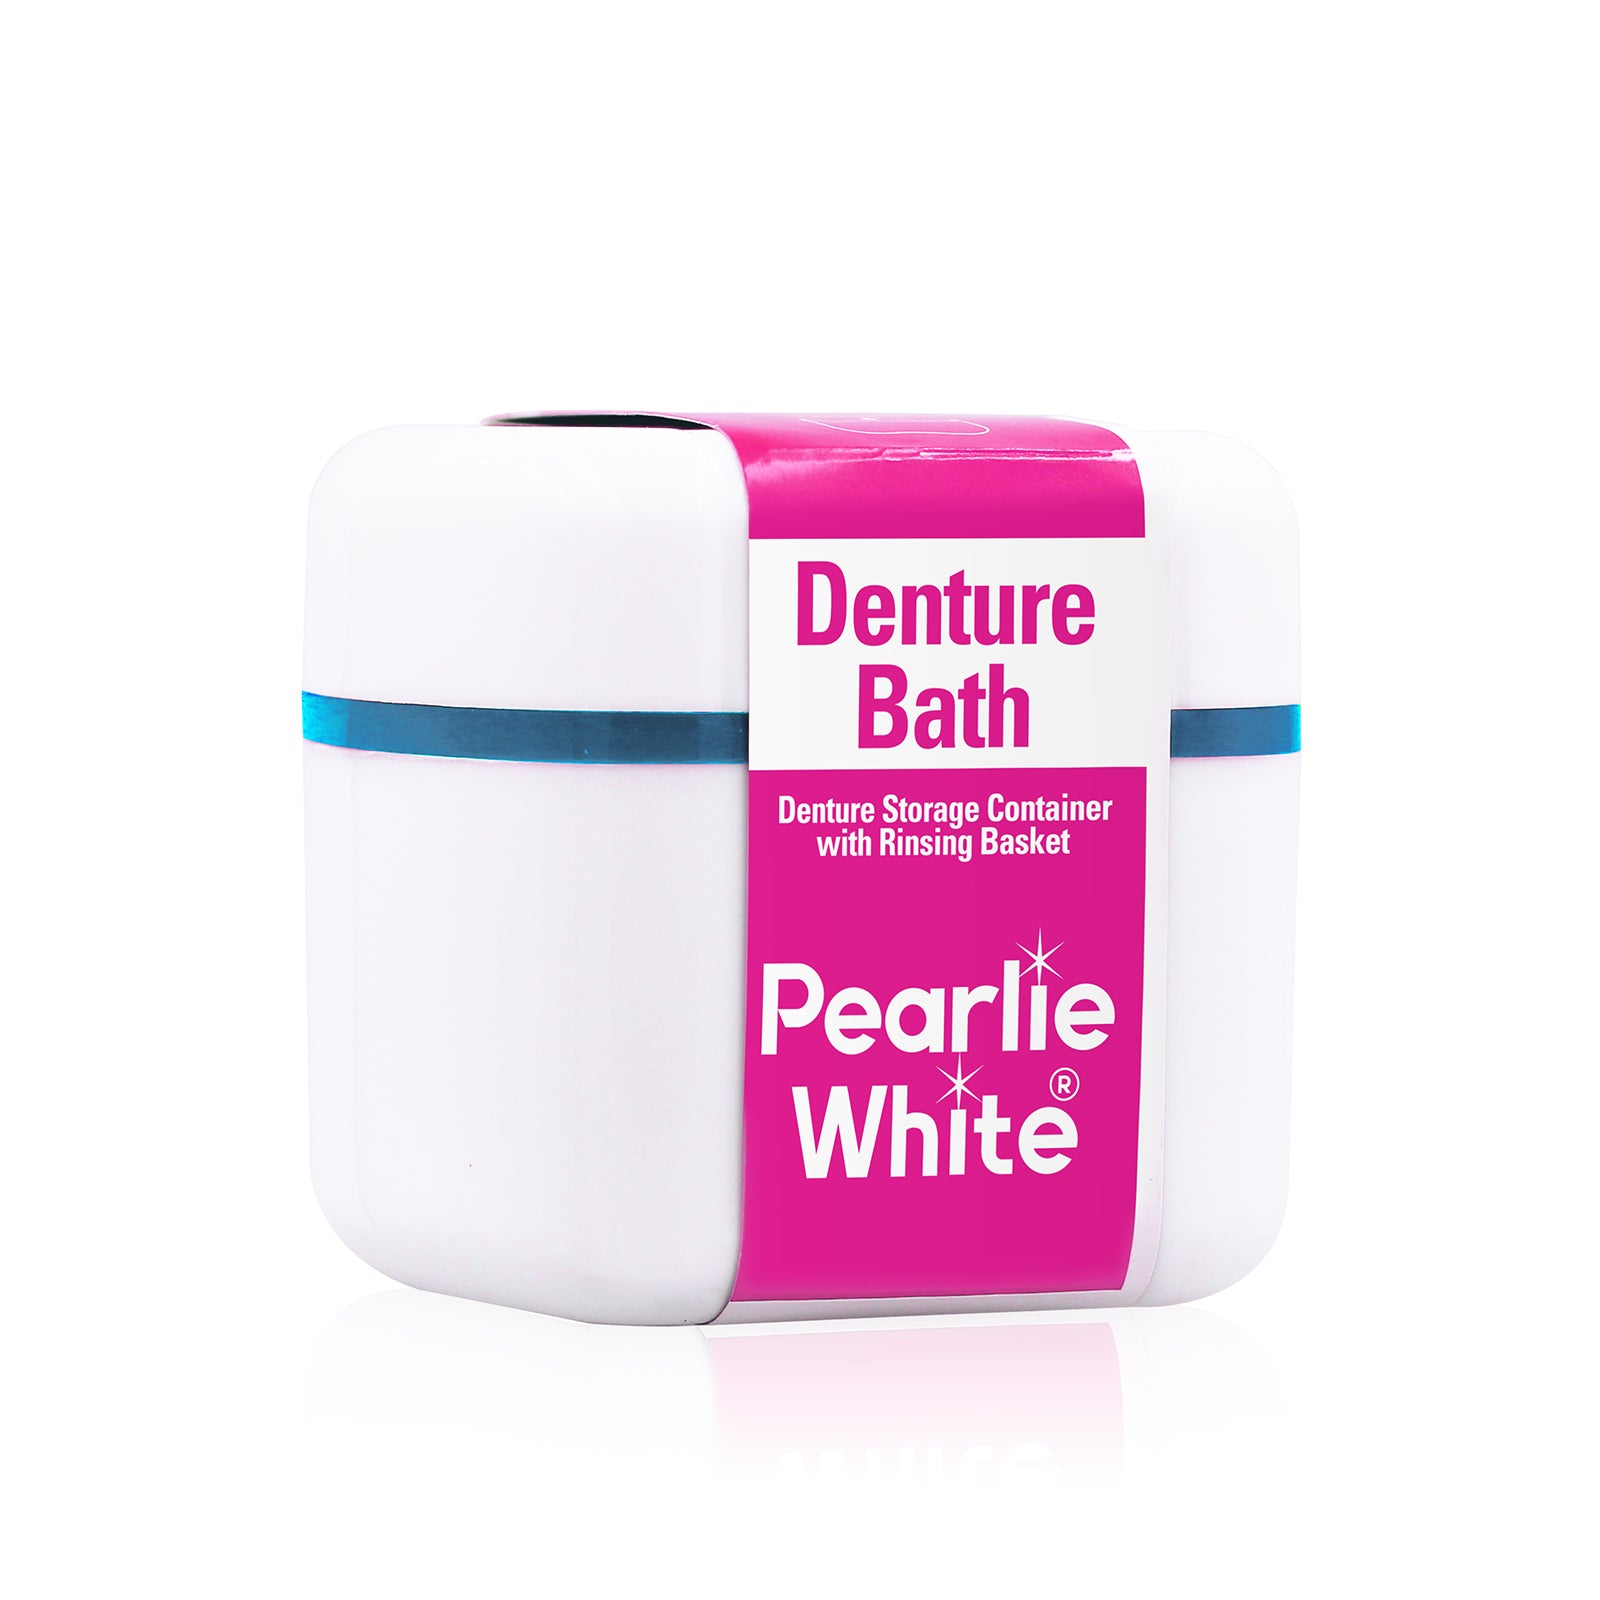 Denture Bath - Denture Container With Rinsing Basket